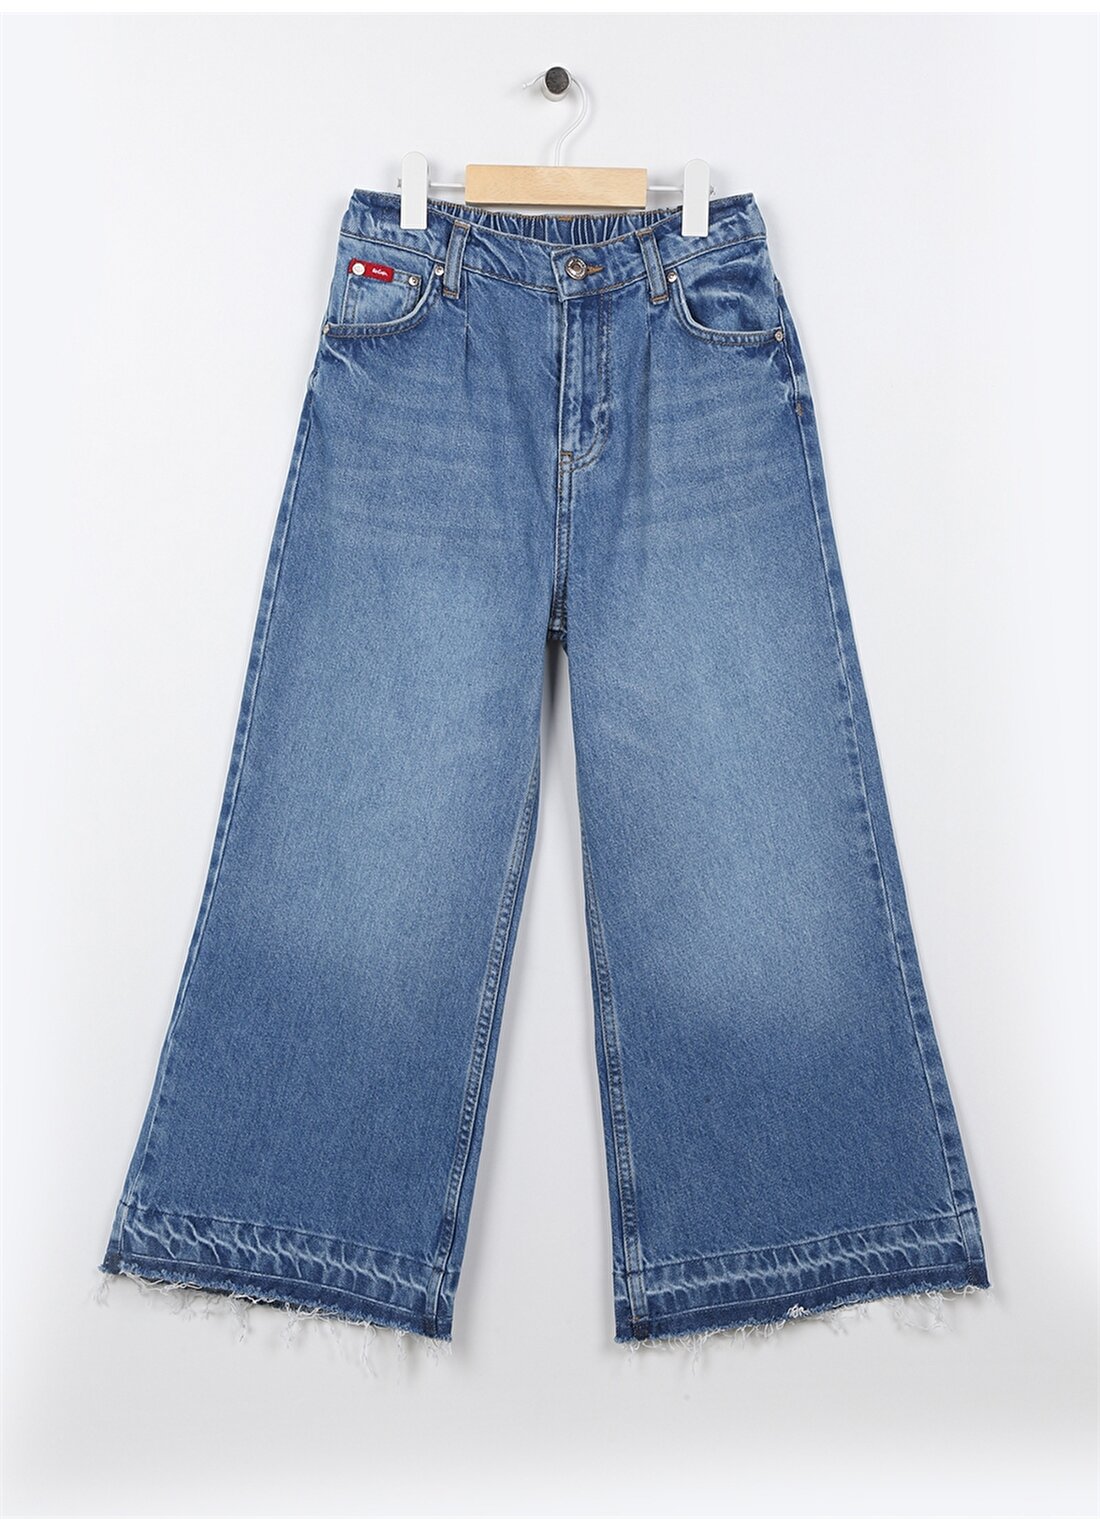 Lee Cooper SANDY MID BLUE Lastikli Bel Mavi Kız Çocuk Denim Pantolon 232 LCG 121011